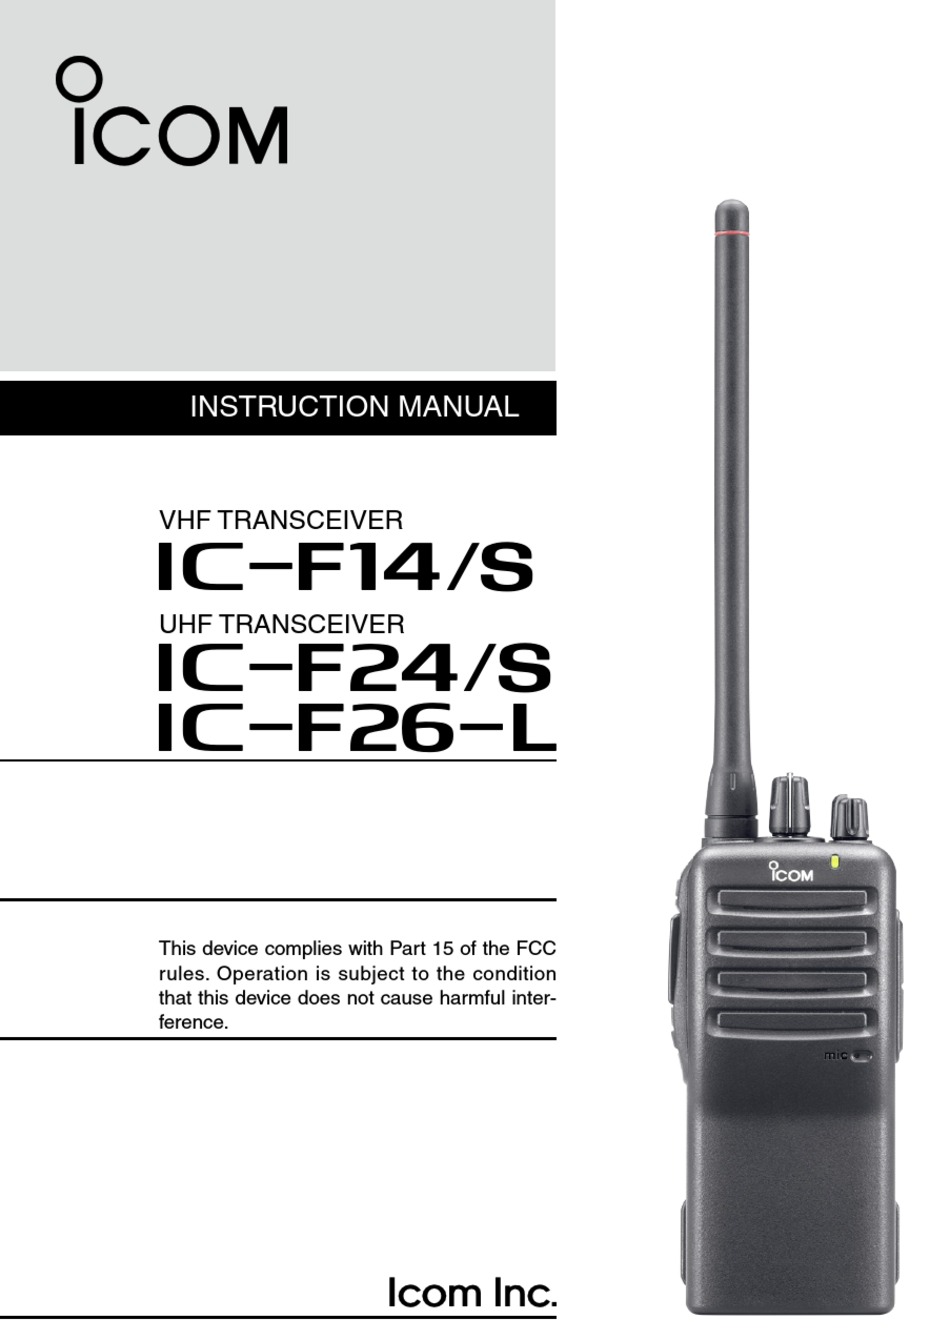 ICOM Radio Standard Belt Clip Shipped with IC-F14 